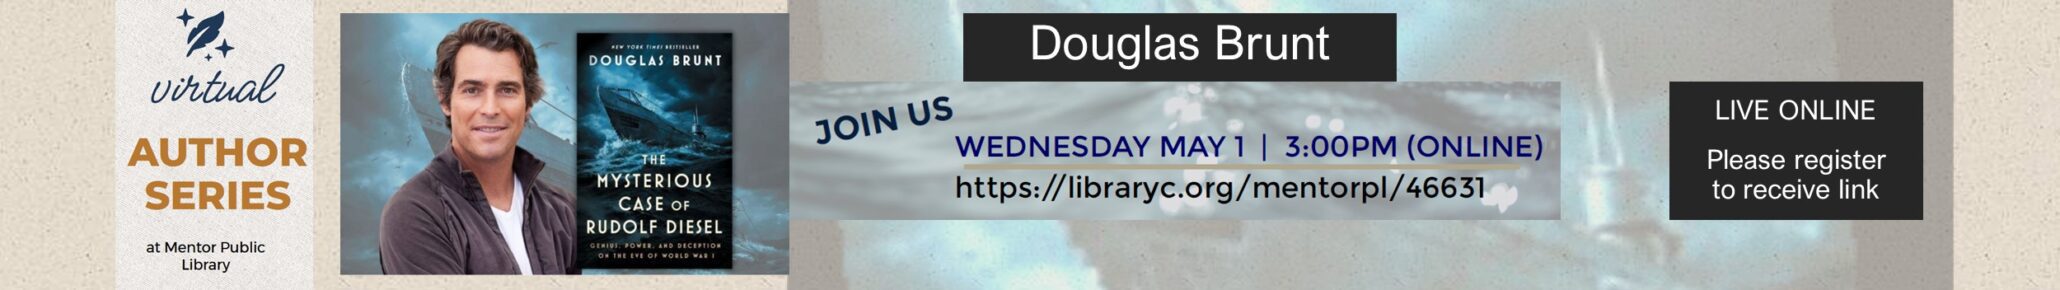 author douglas brunt live online may 1